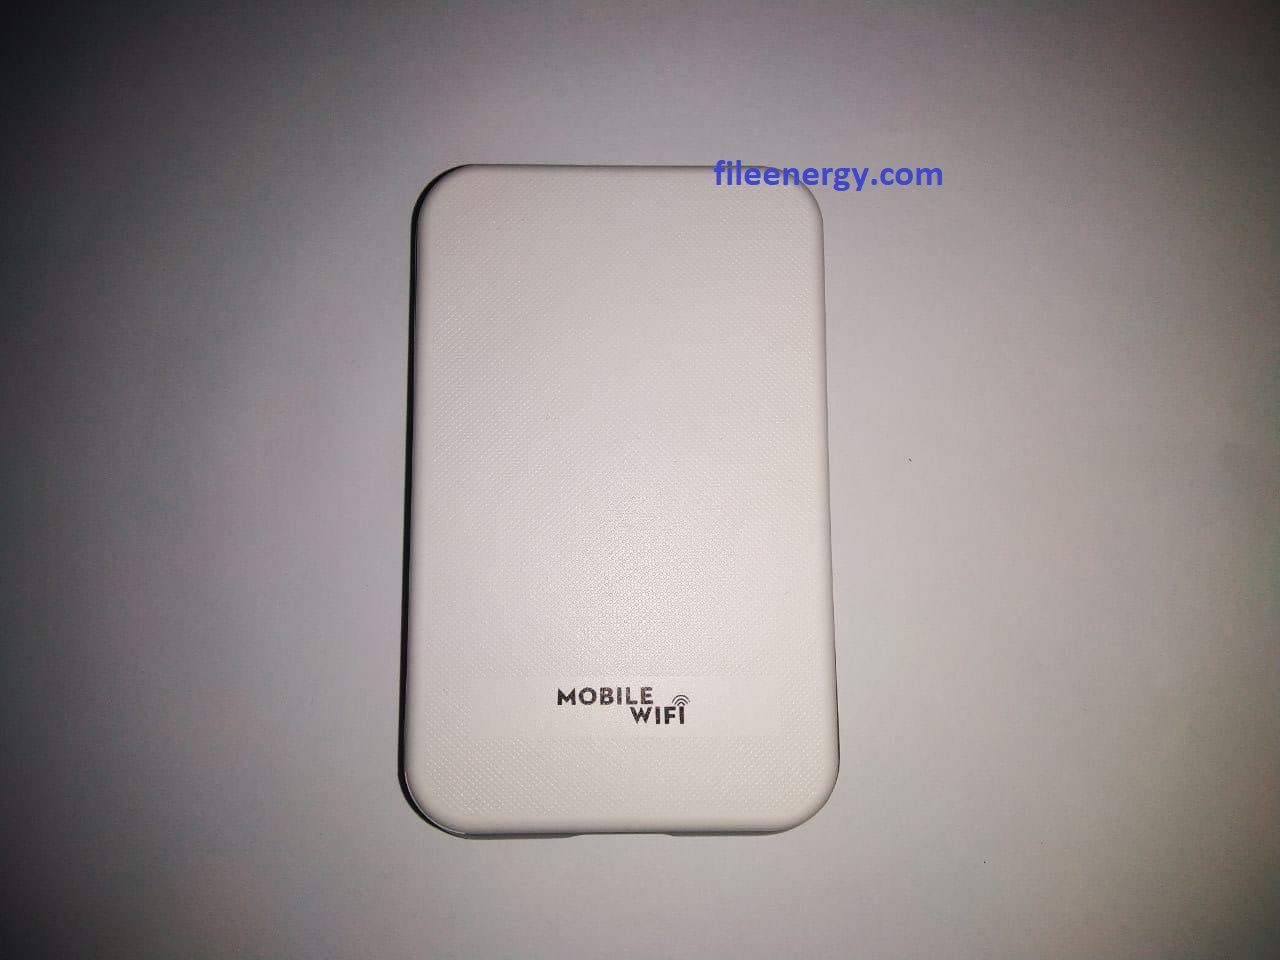 Карманный Wi-Fi роутер (модем) TianJie 4G Lte MF903Pro